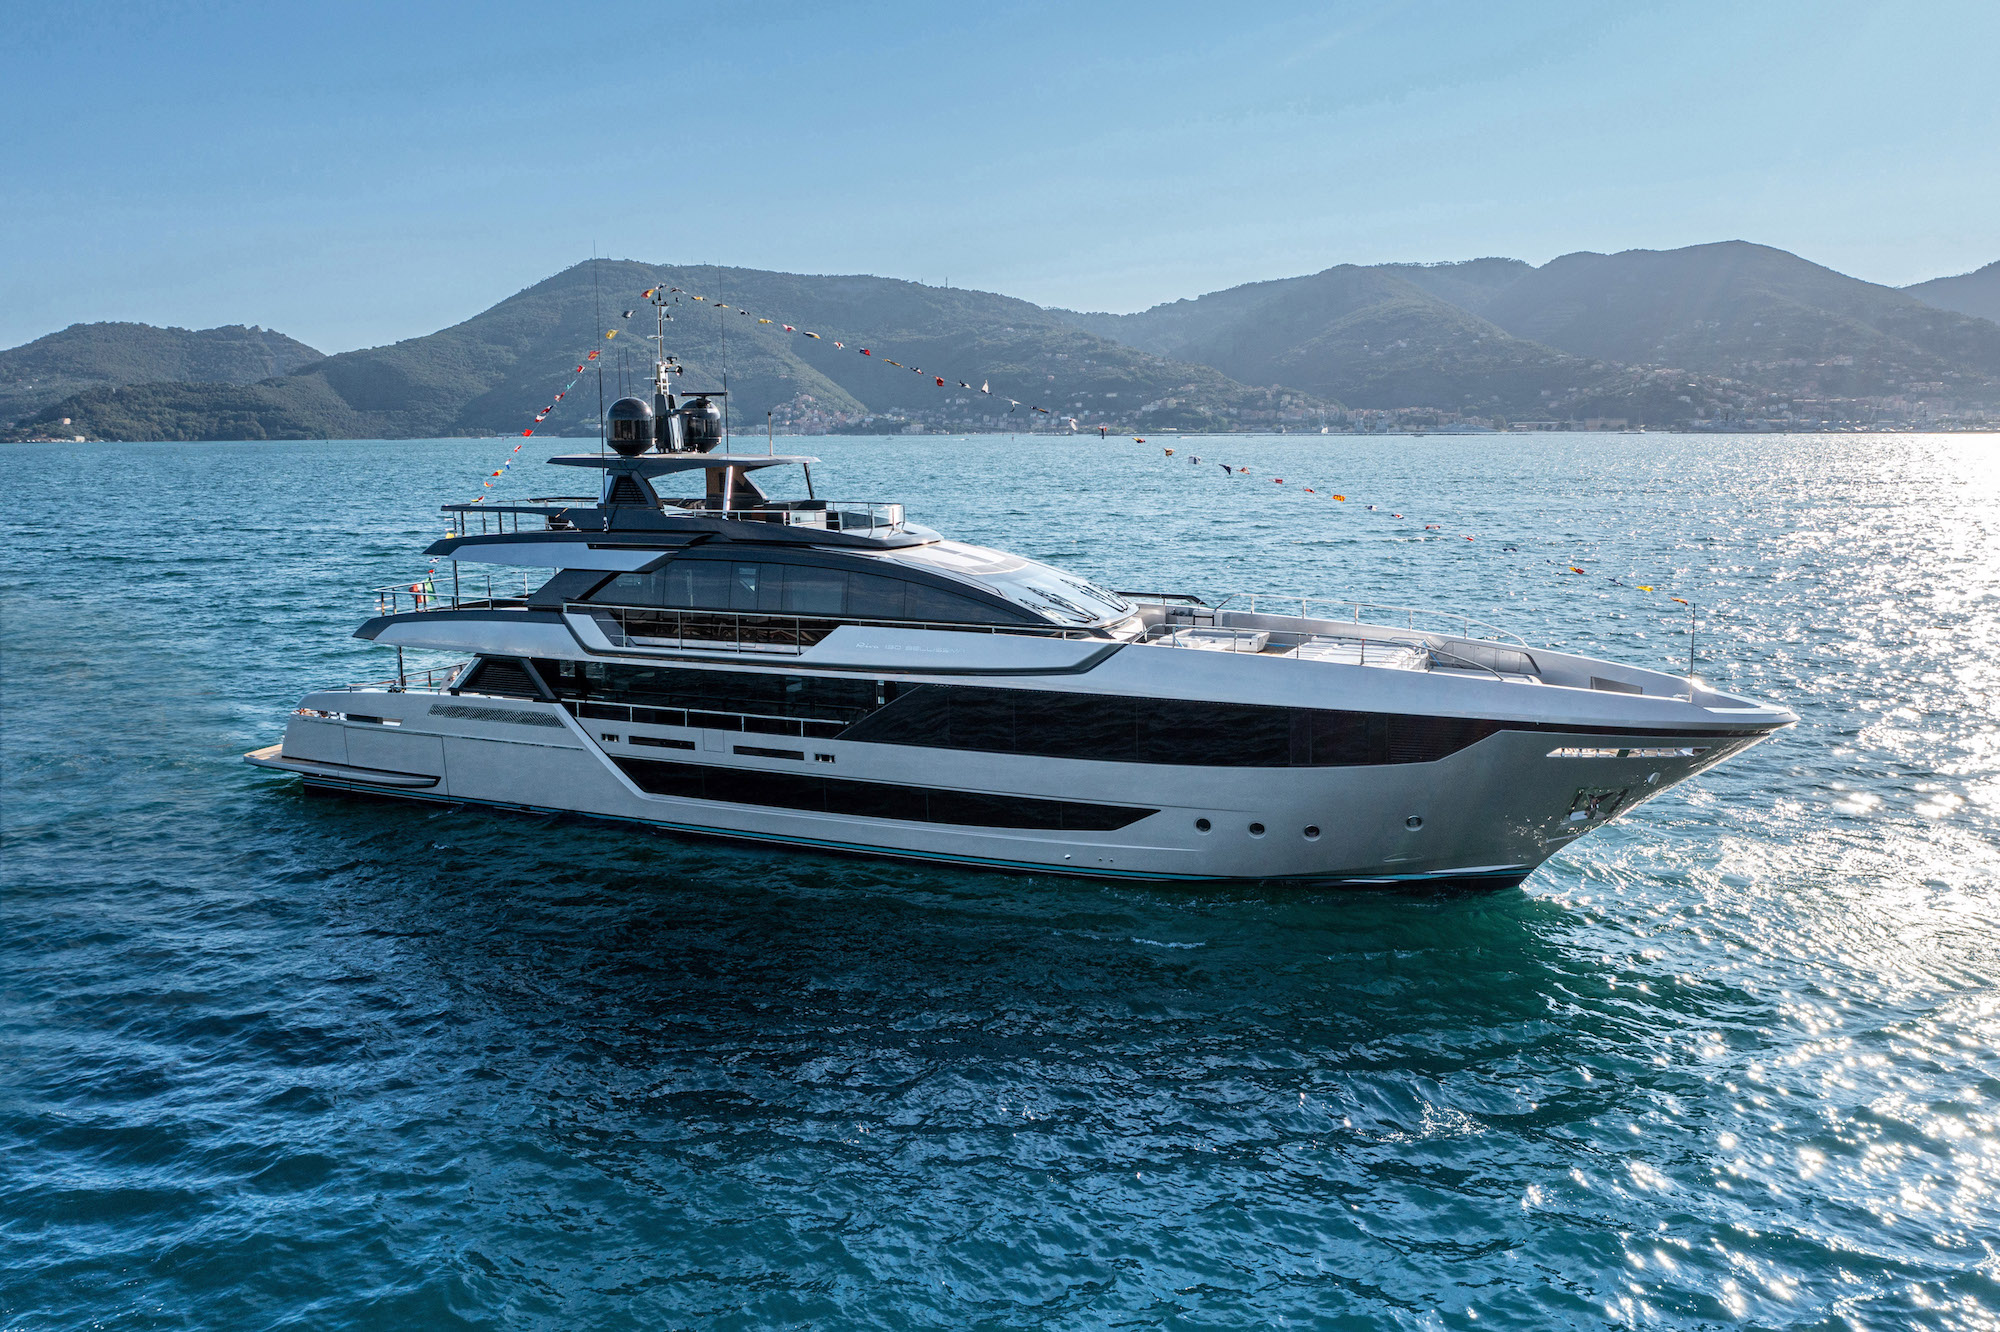 riva ferretti brand manufacturer italy italian yacht luxury high-end technology